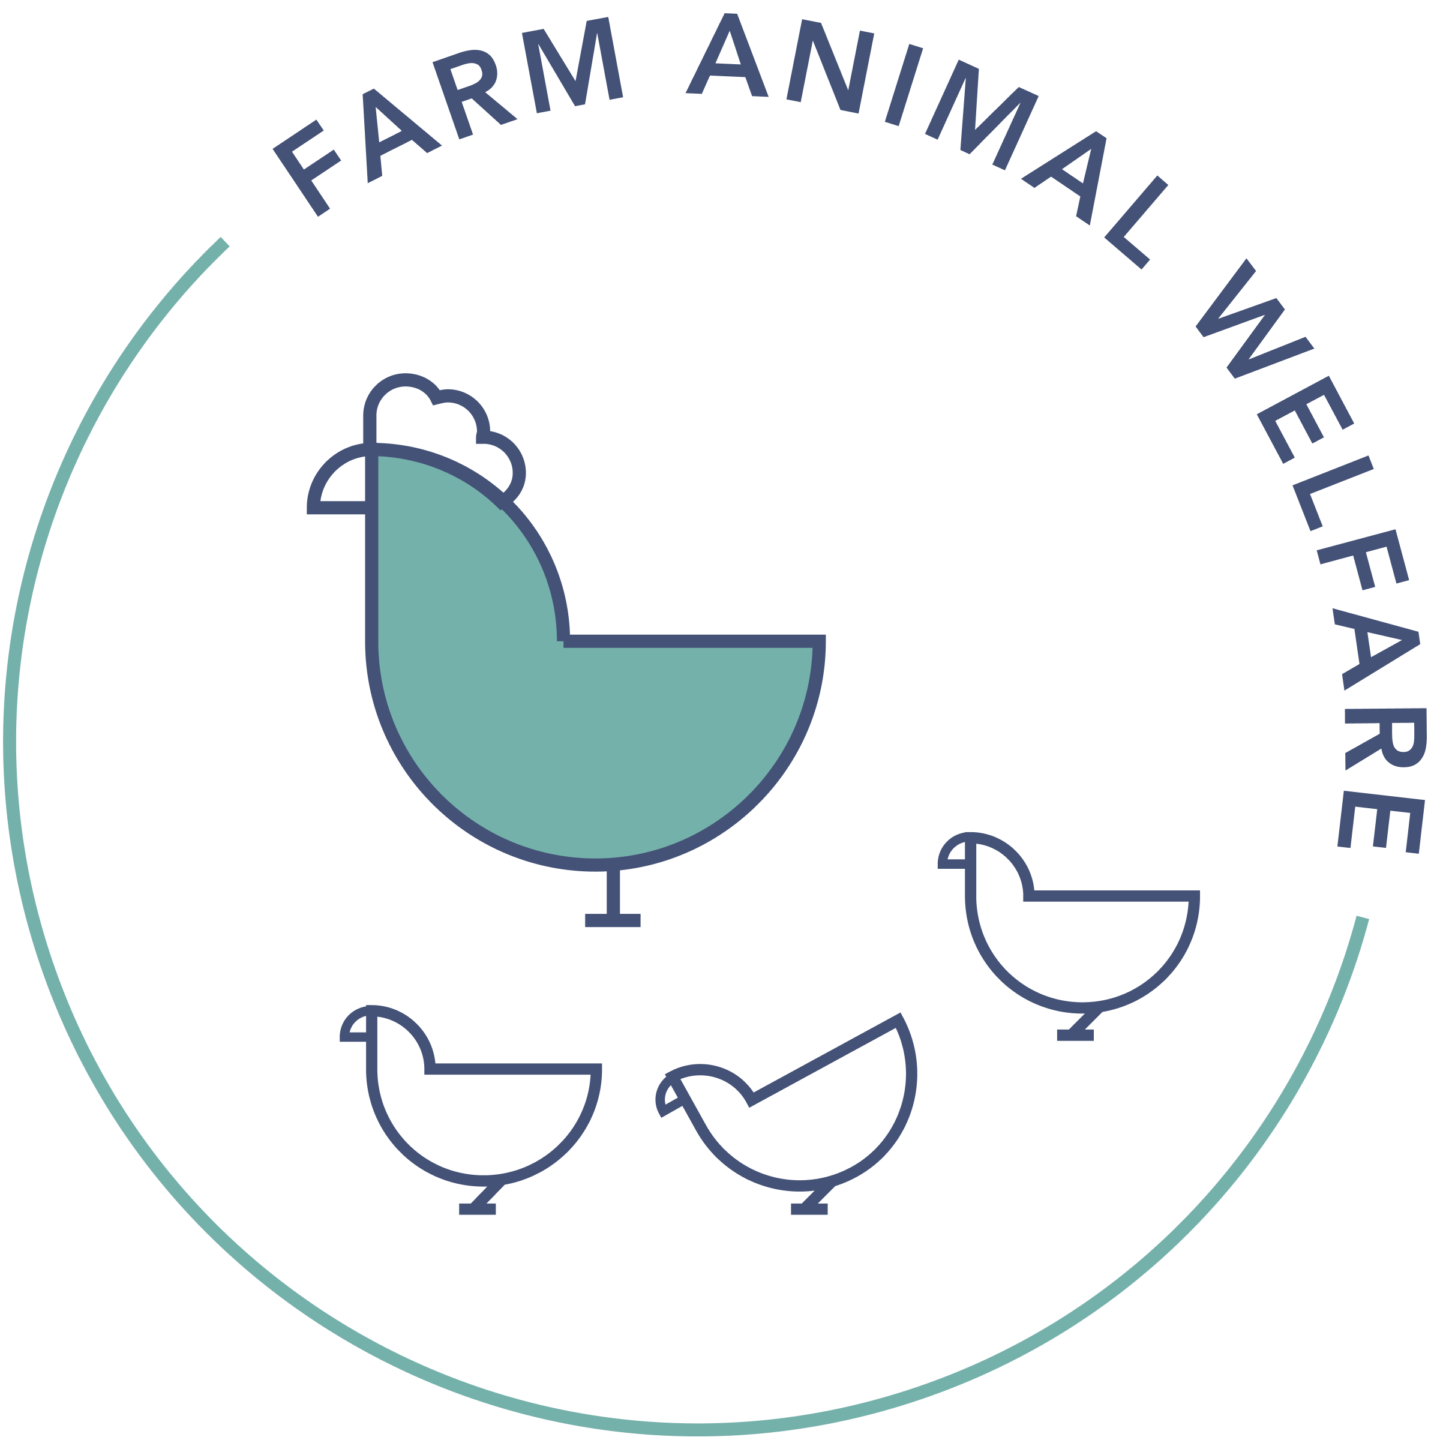 Farm Animal Welfare - Open Philanthropy